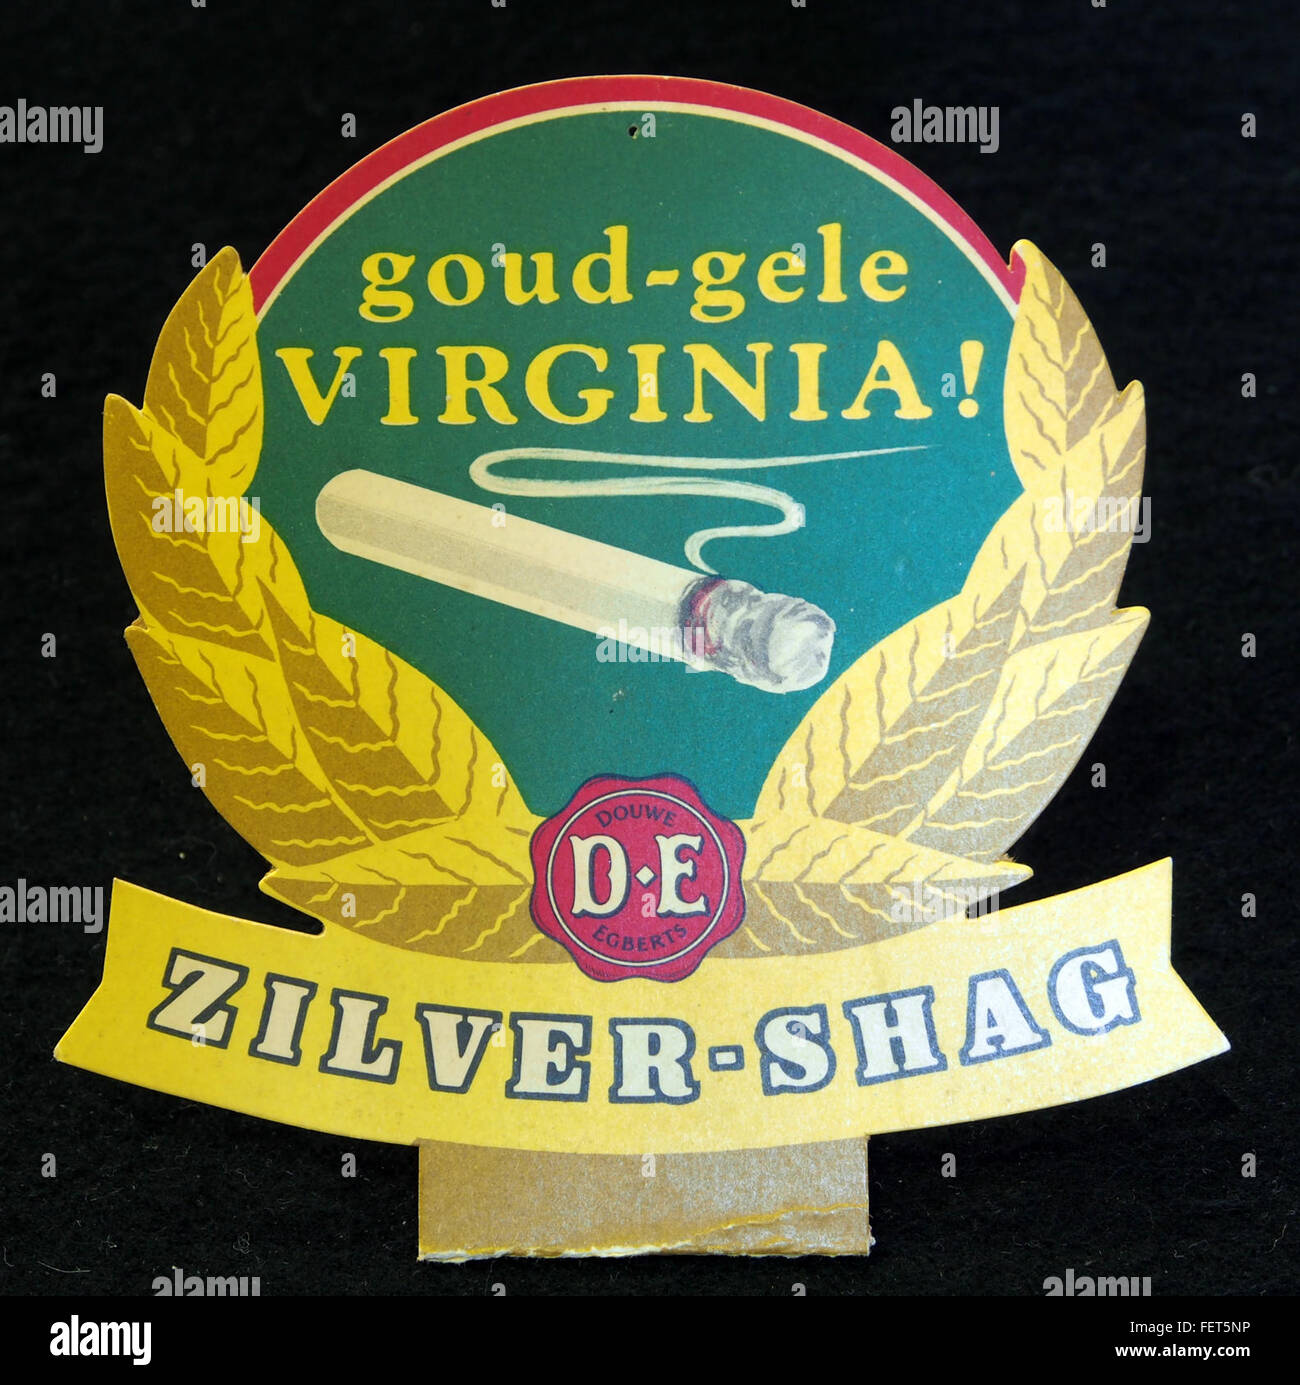 Goud-gele VIRGINIA Zilver-Shag, Douwe Egberts, kartonnen toonbankreklame, foto 2 Foto Stock